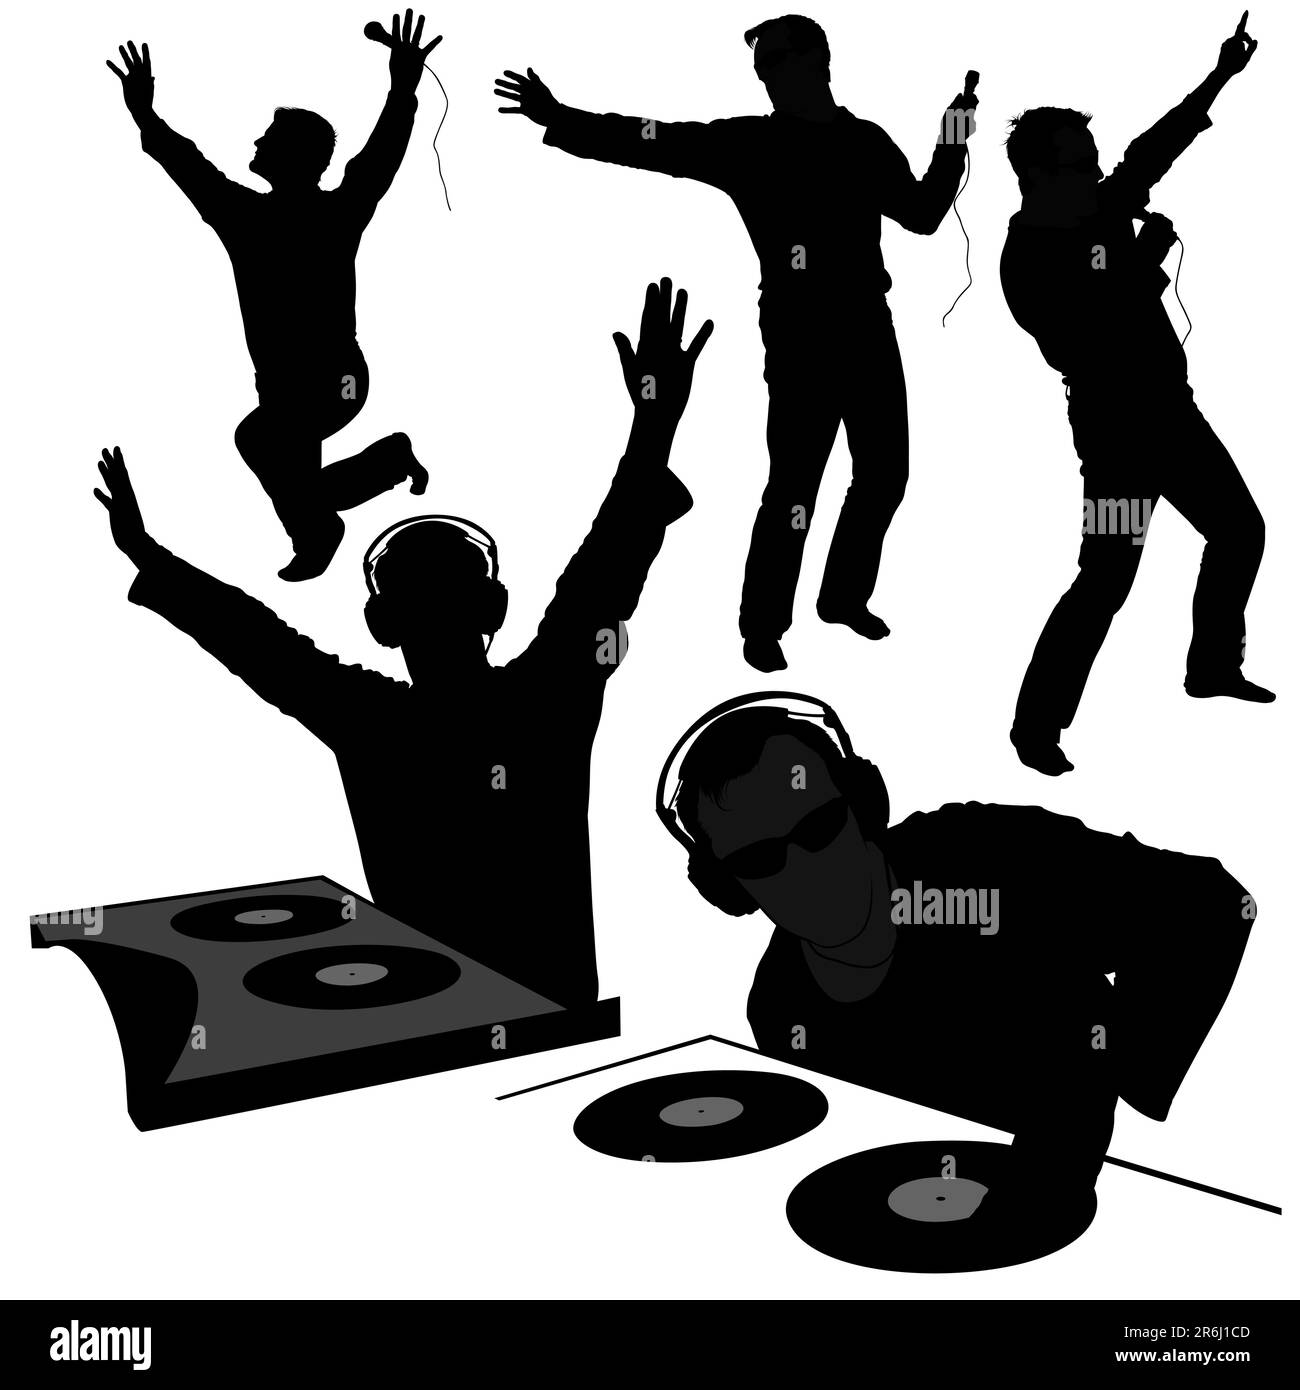 DJs 02 - Deejay silhouettes - Hight detailed black & white vector illustrations Stock Vector